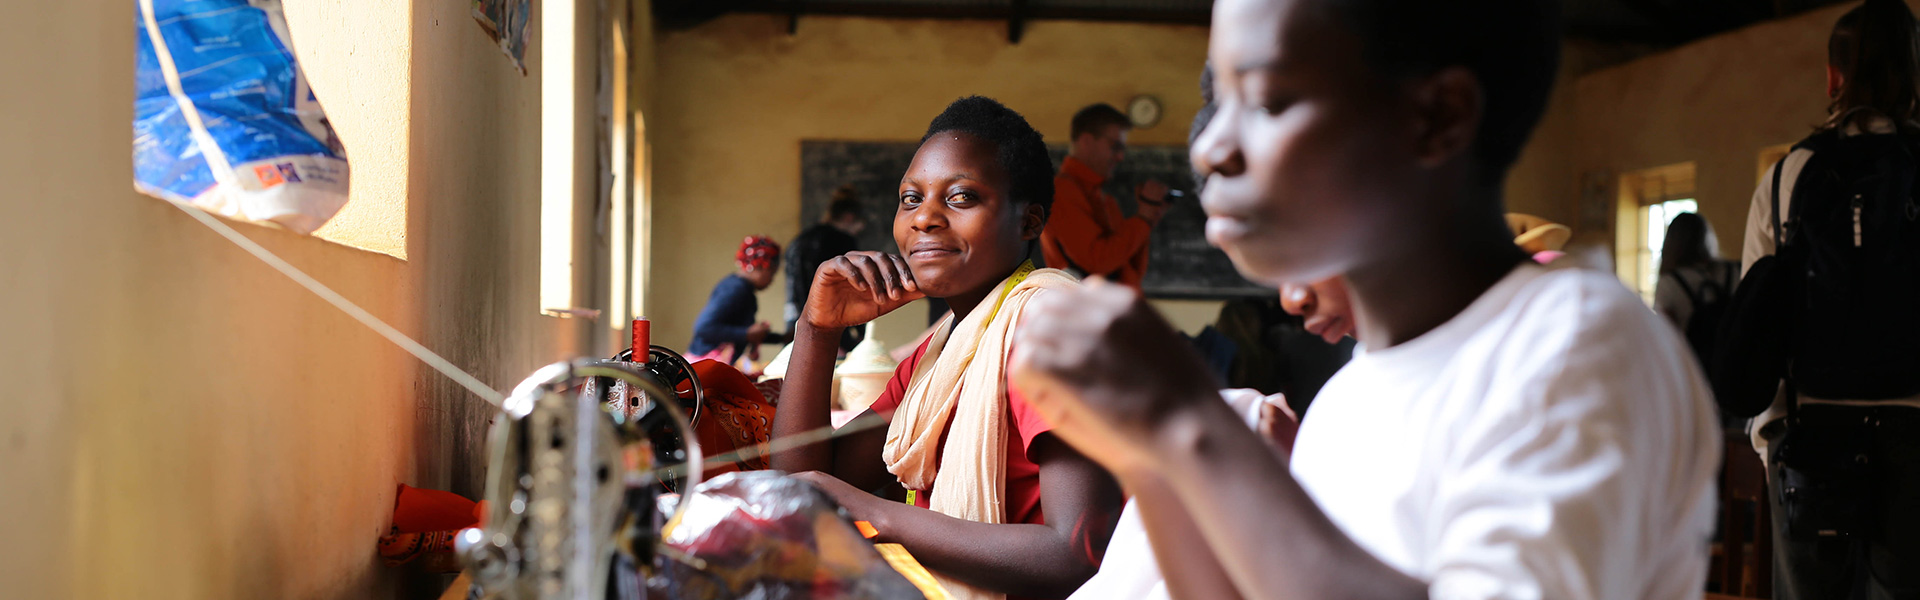 uganda-vocational-training-tailor-adolescents